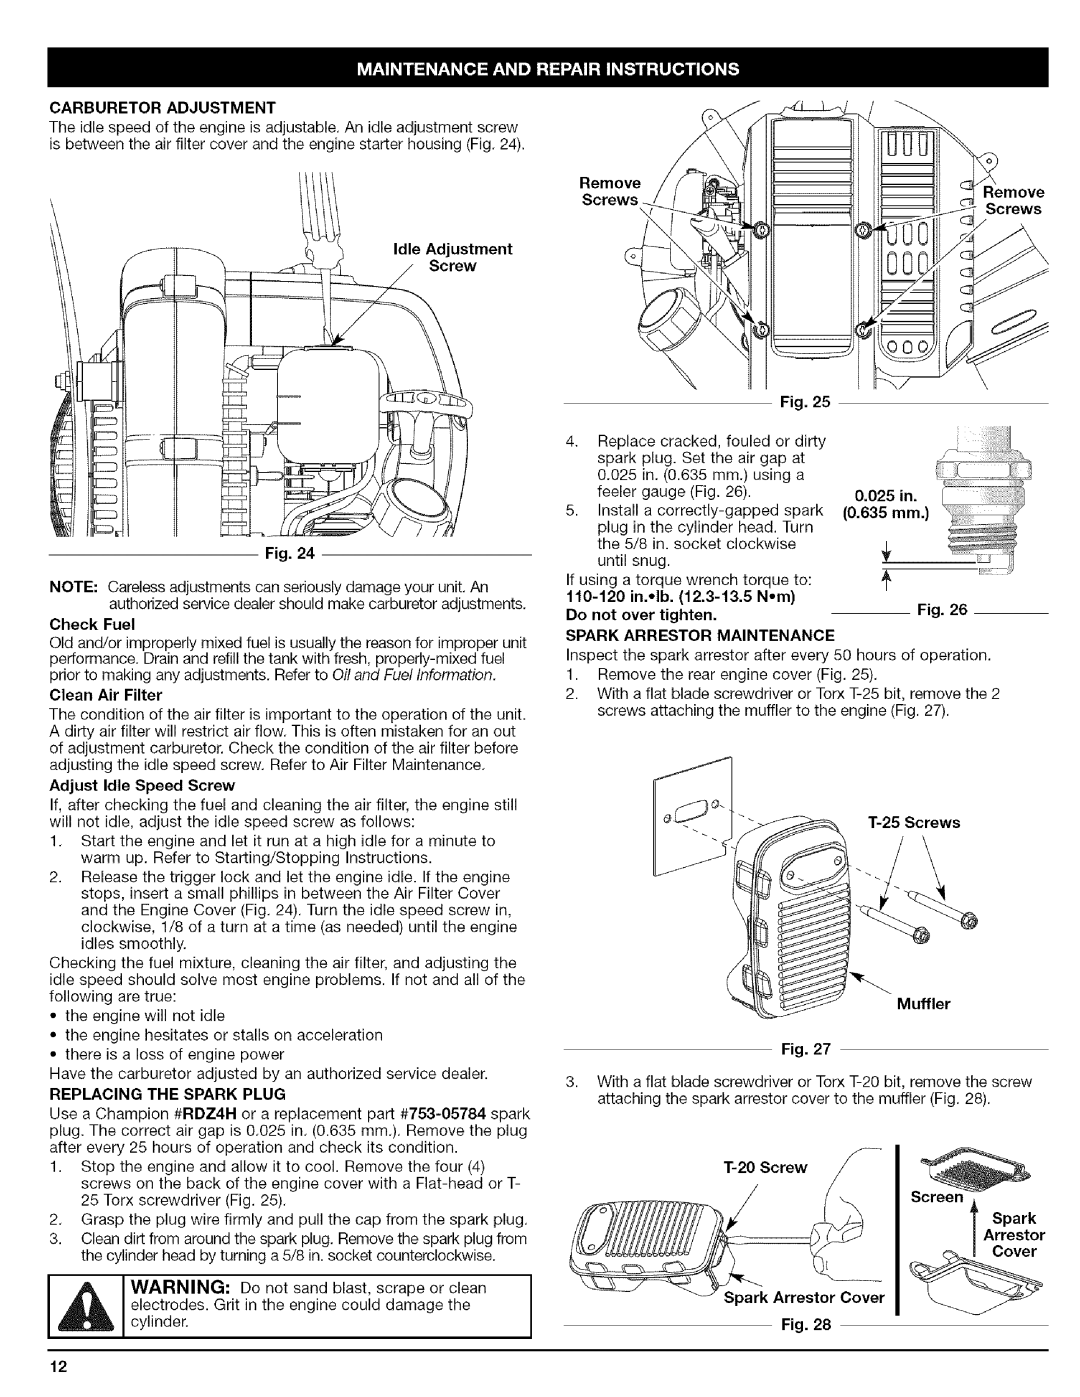 Craftsman 316.79479 manual Carburetoradjustment 